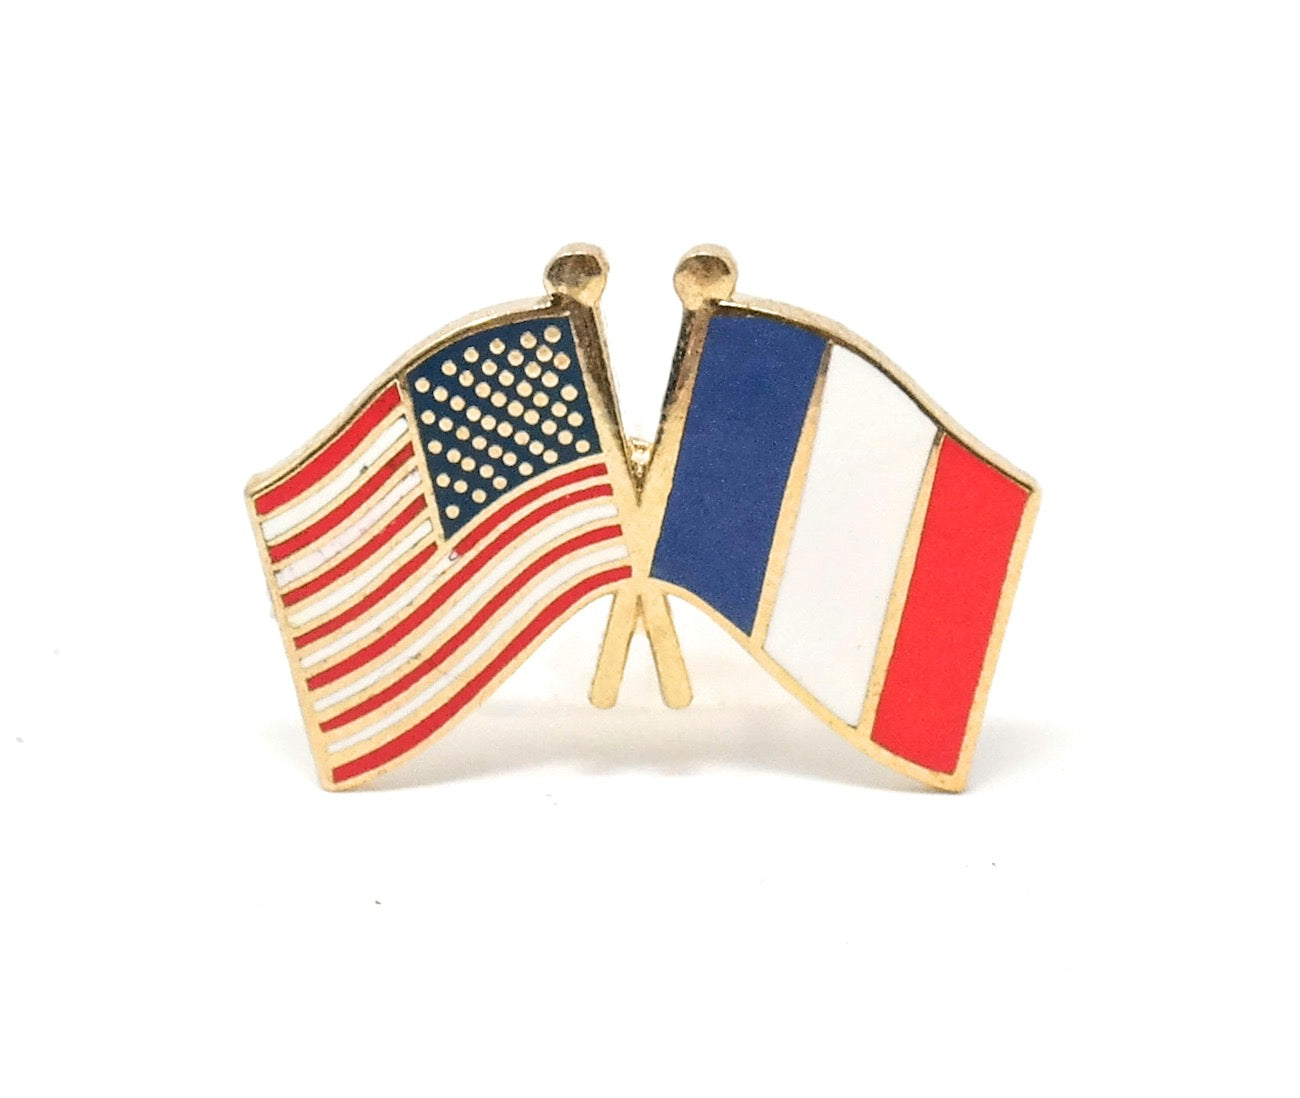 France & USA Friendship Flags Lapel Pin